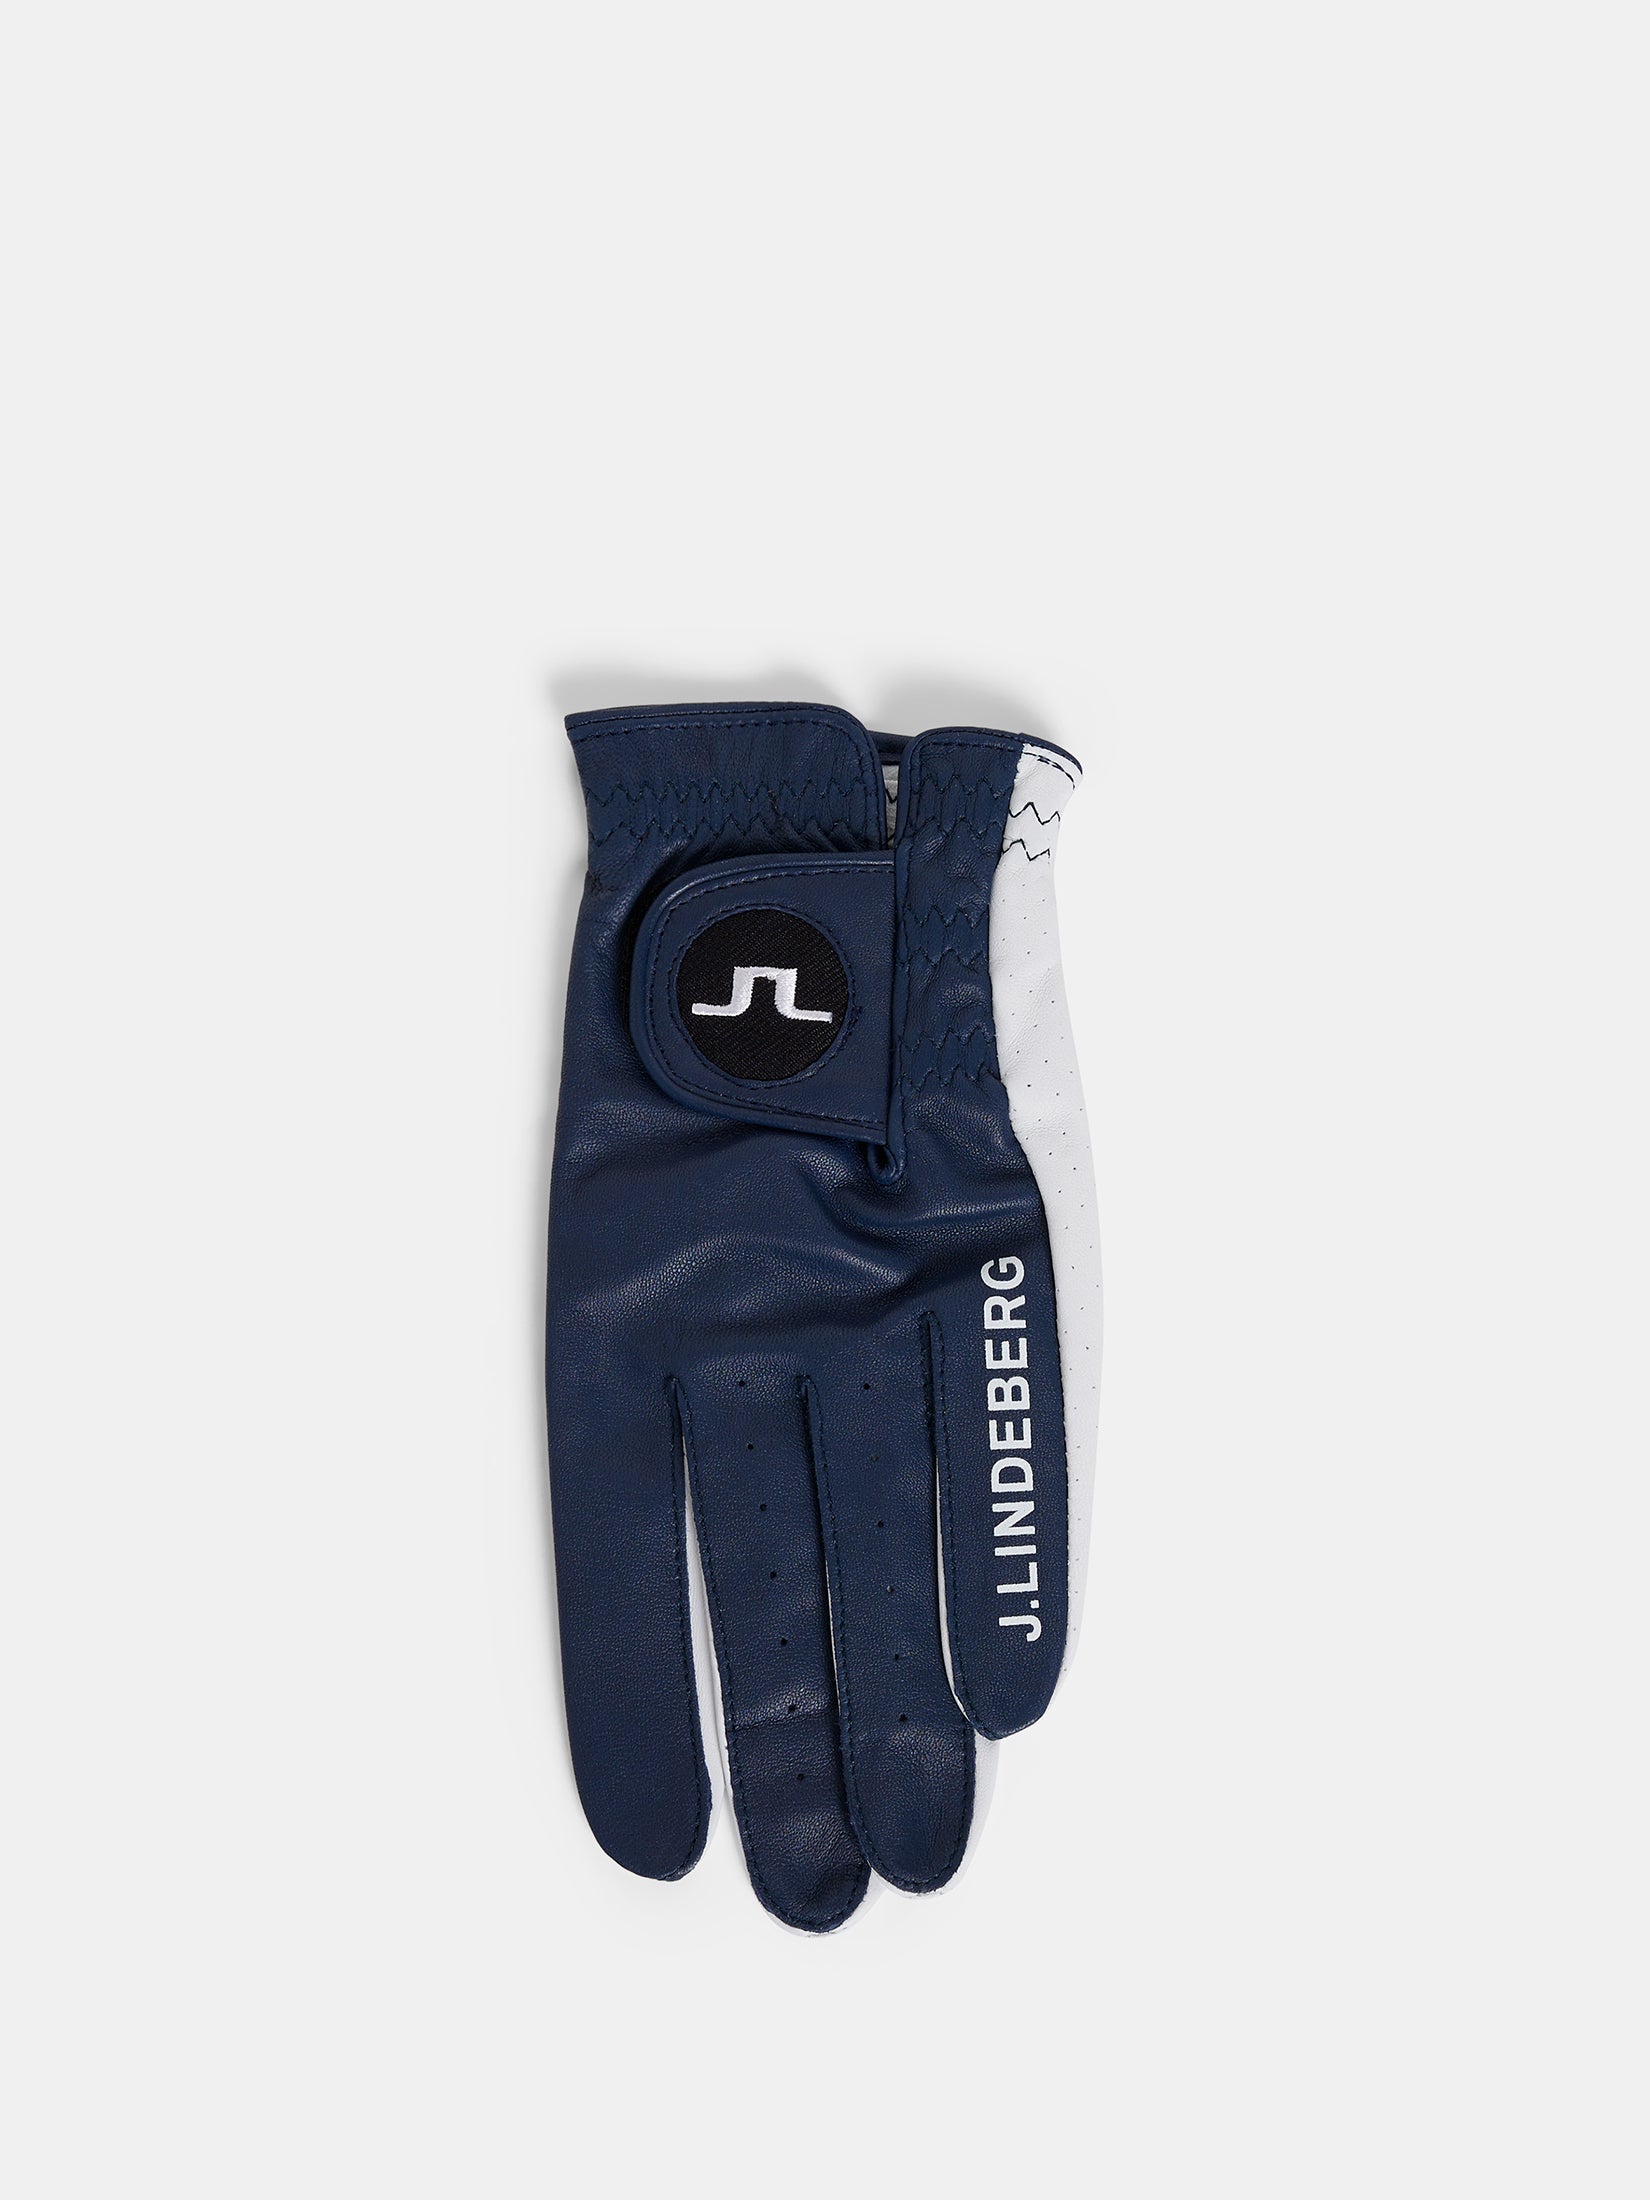 Ron Leather Golf Glove